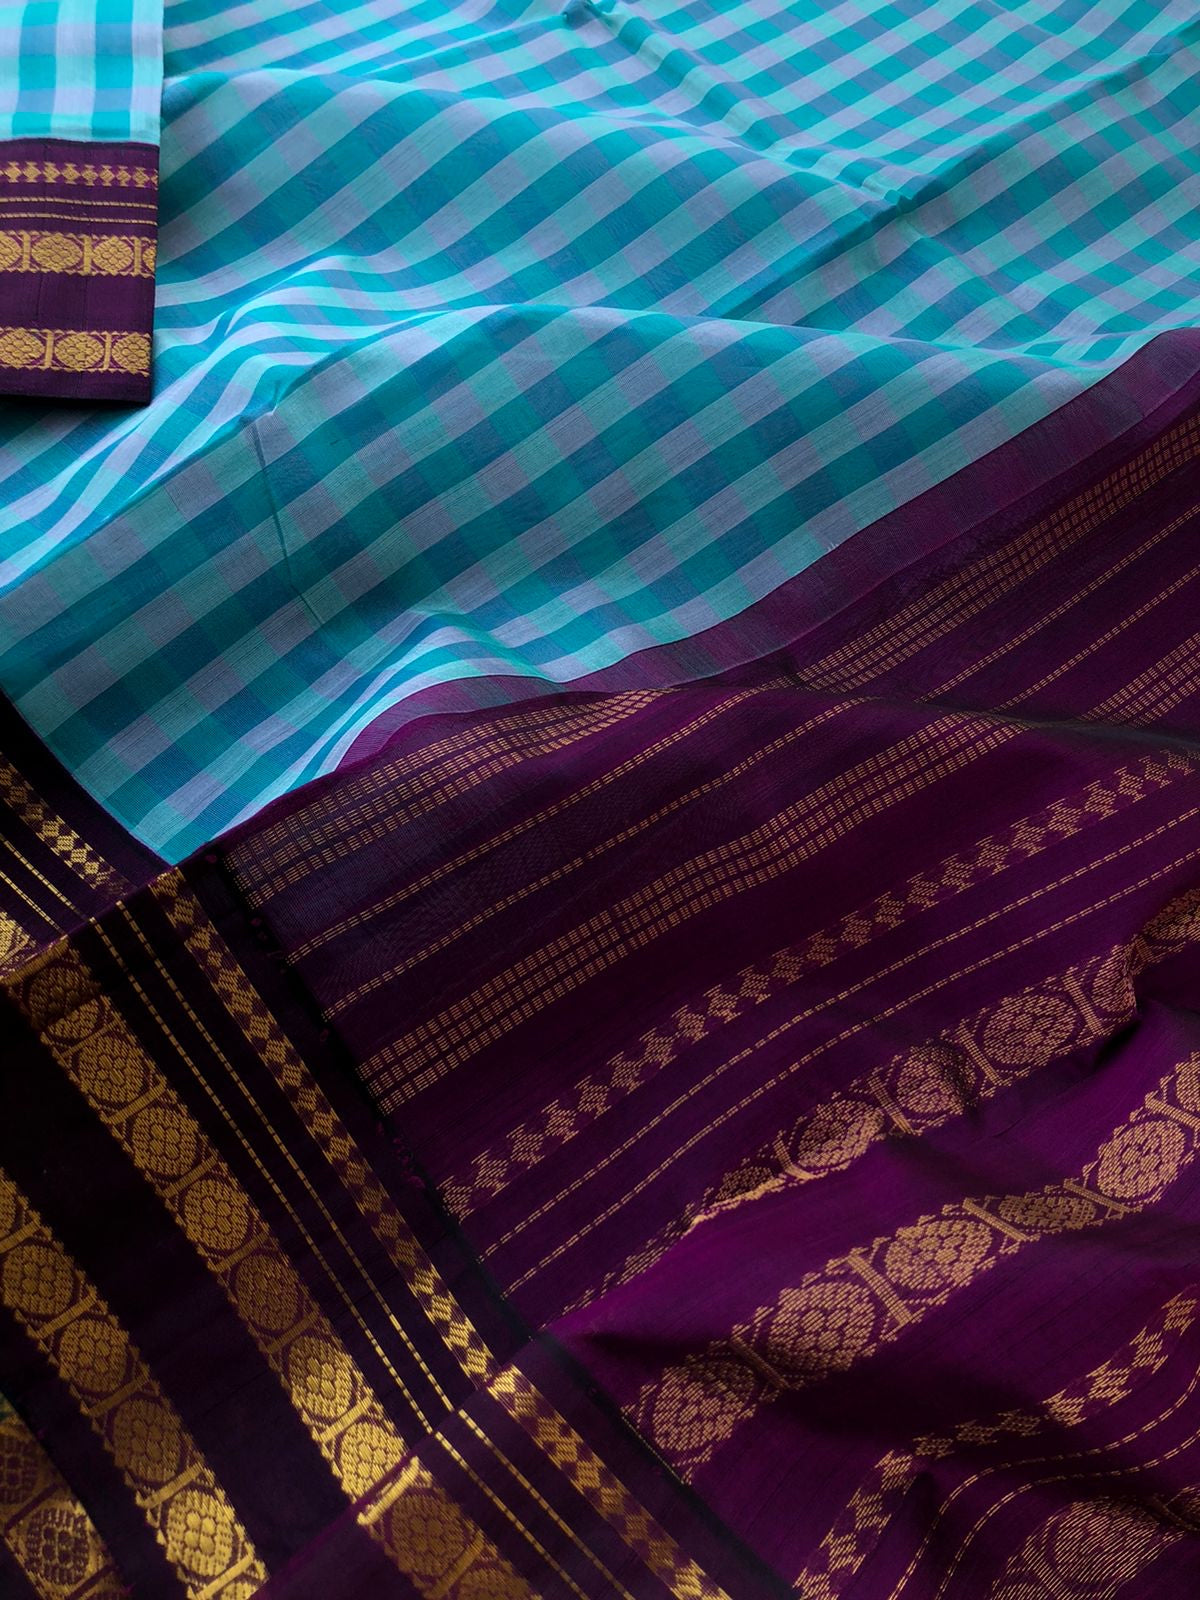 Paalum palamum kattam on Korvai Silk Cotton - turquoise blue and lavender